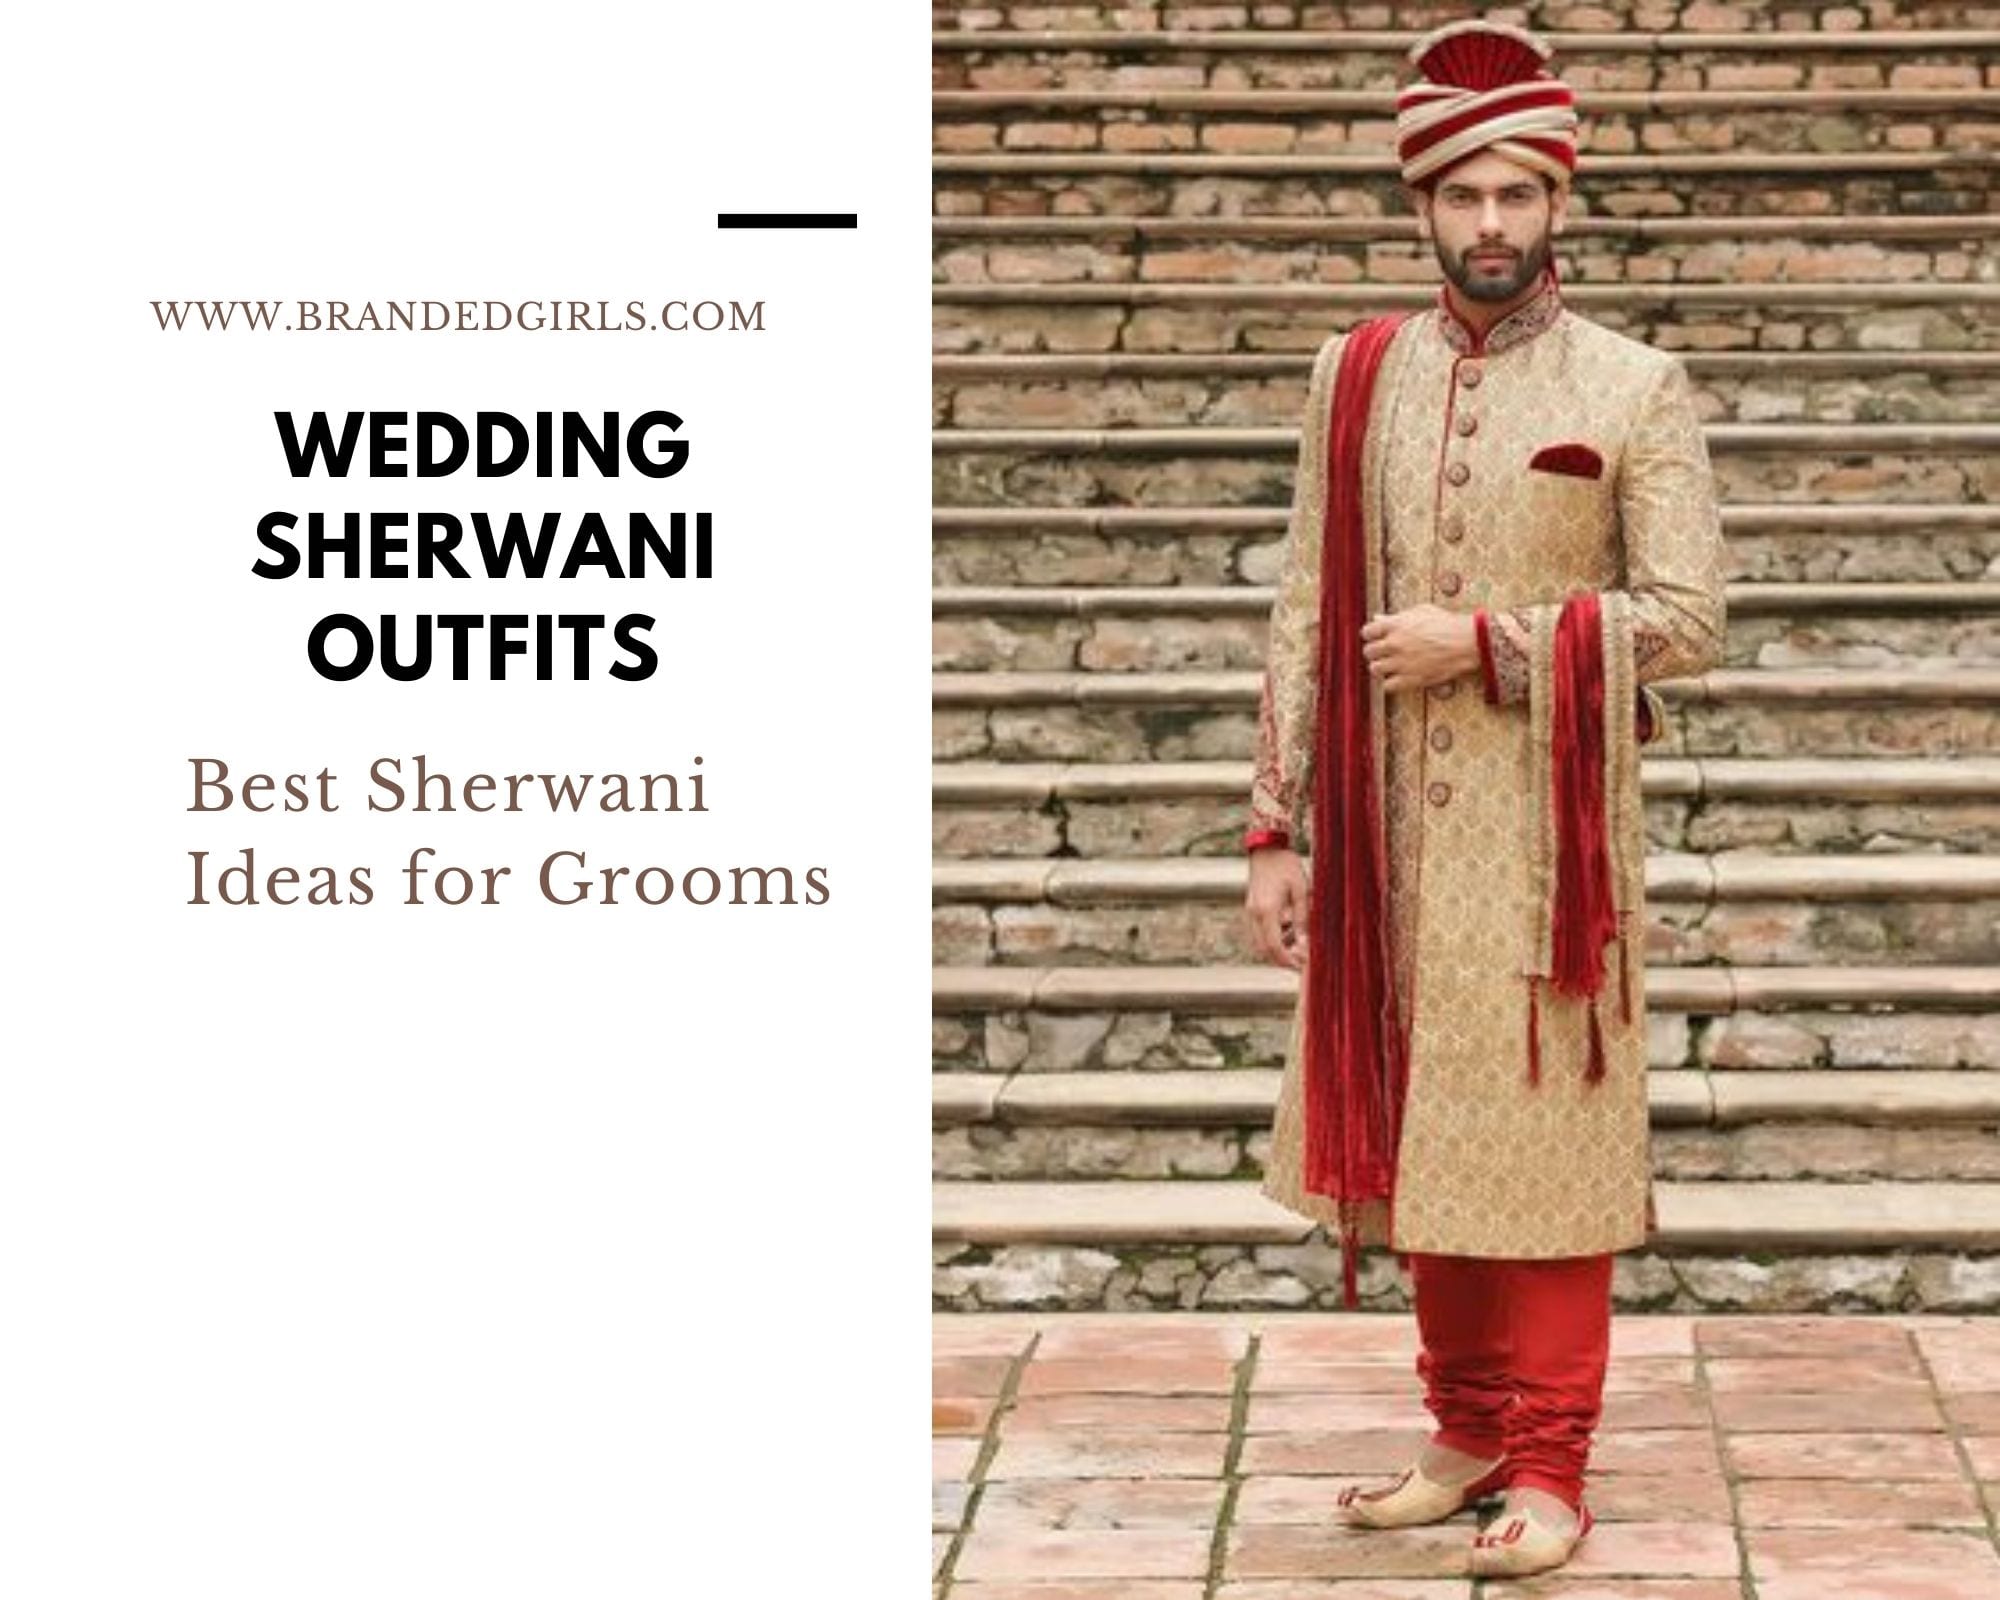 Wedding Sherwani Outfits - 20 Best Sherwani Ideas for Grooms